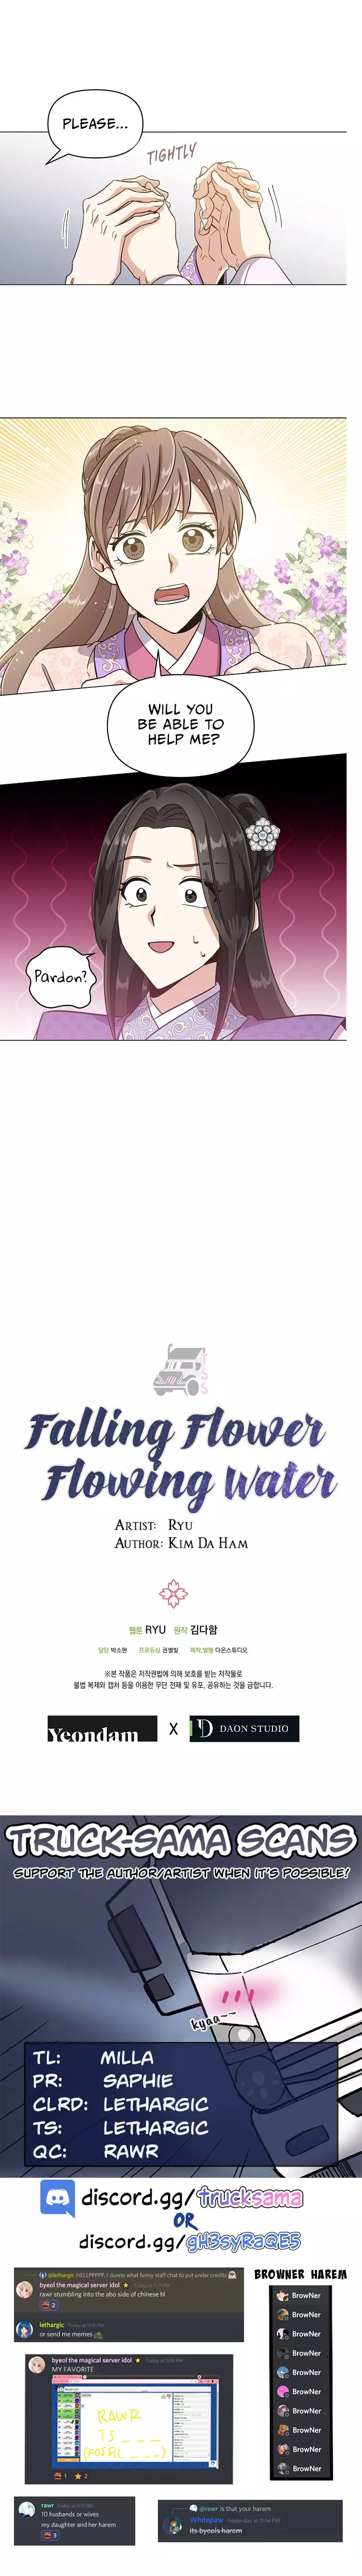 Falling Flower, Flowing Water - 15 page 14